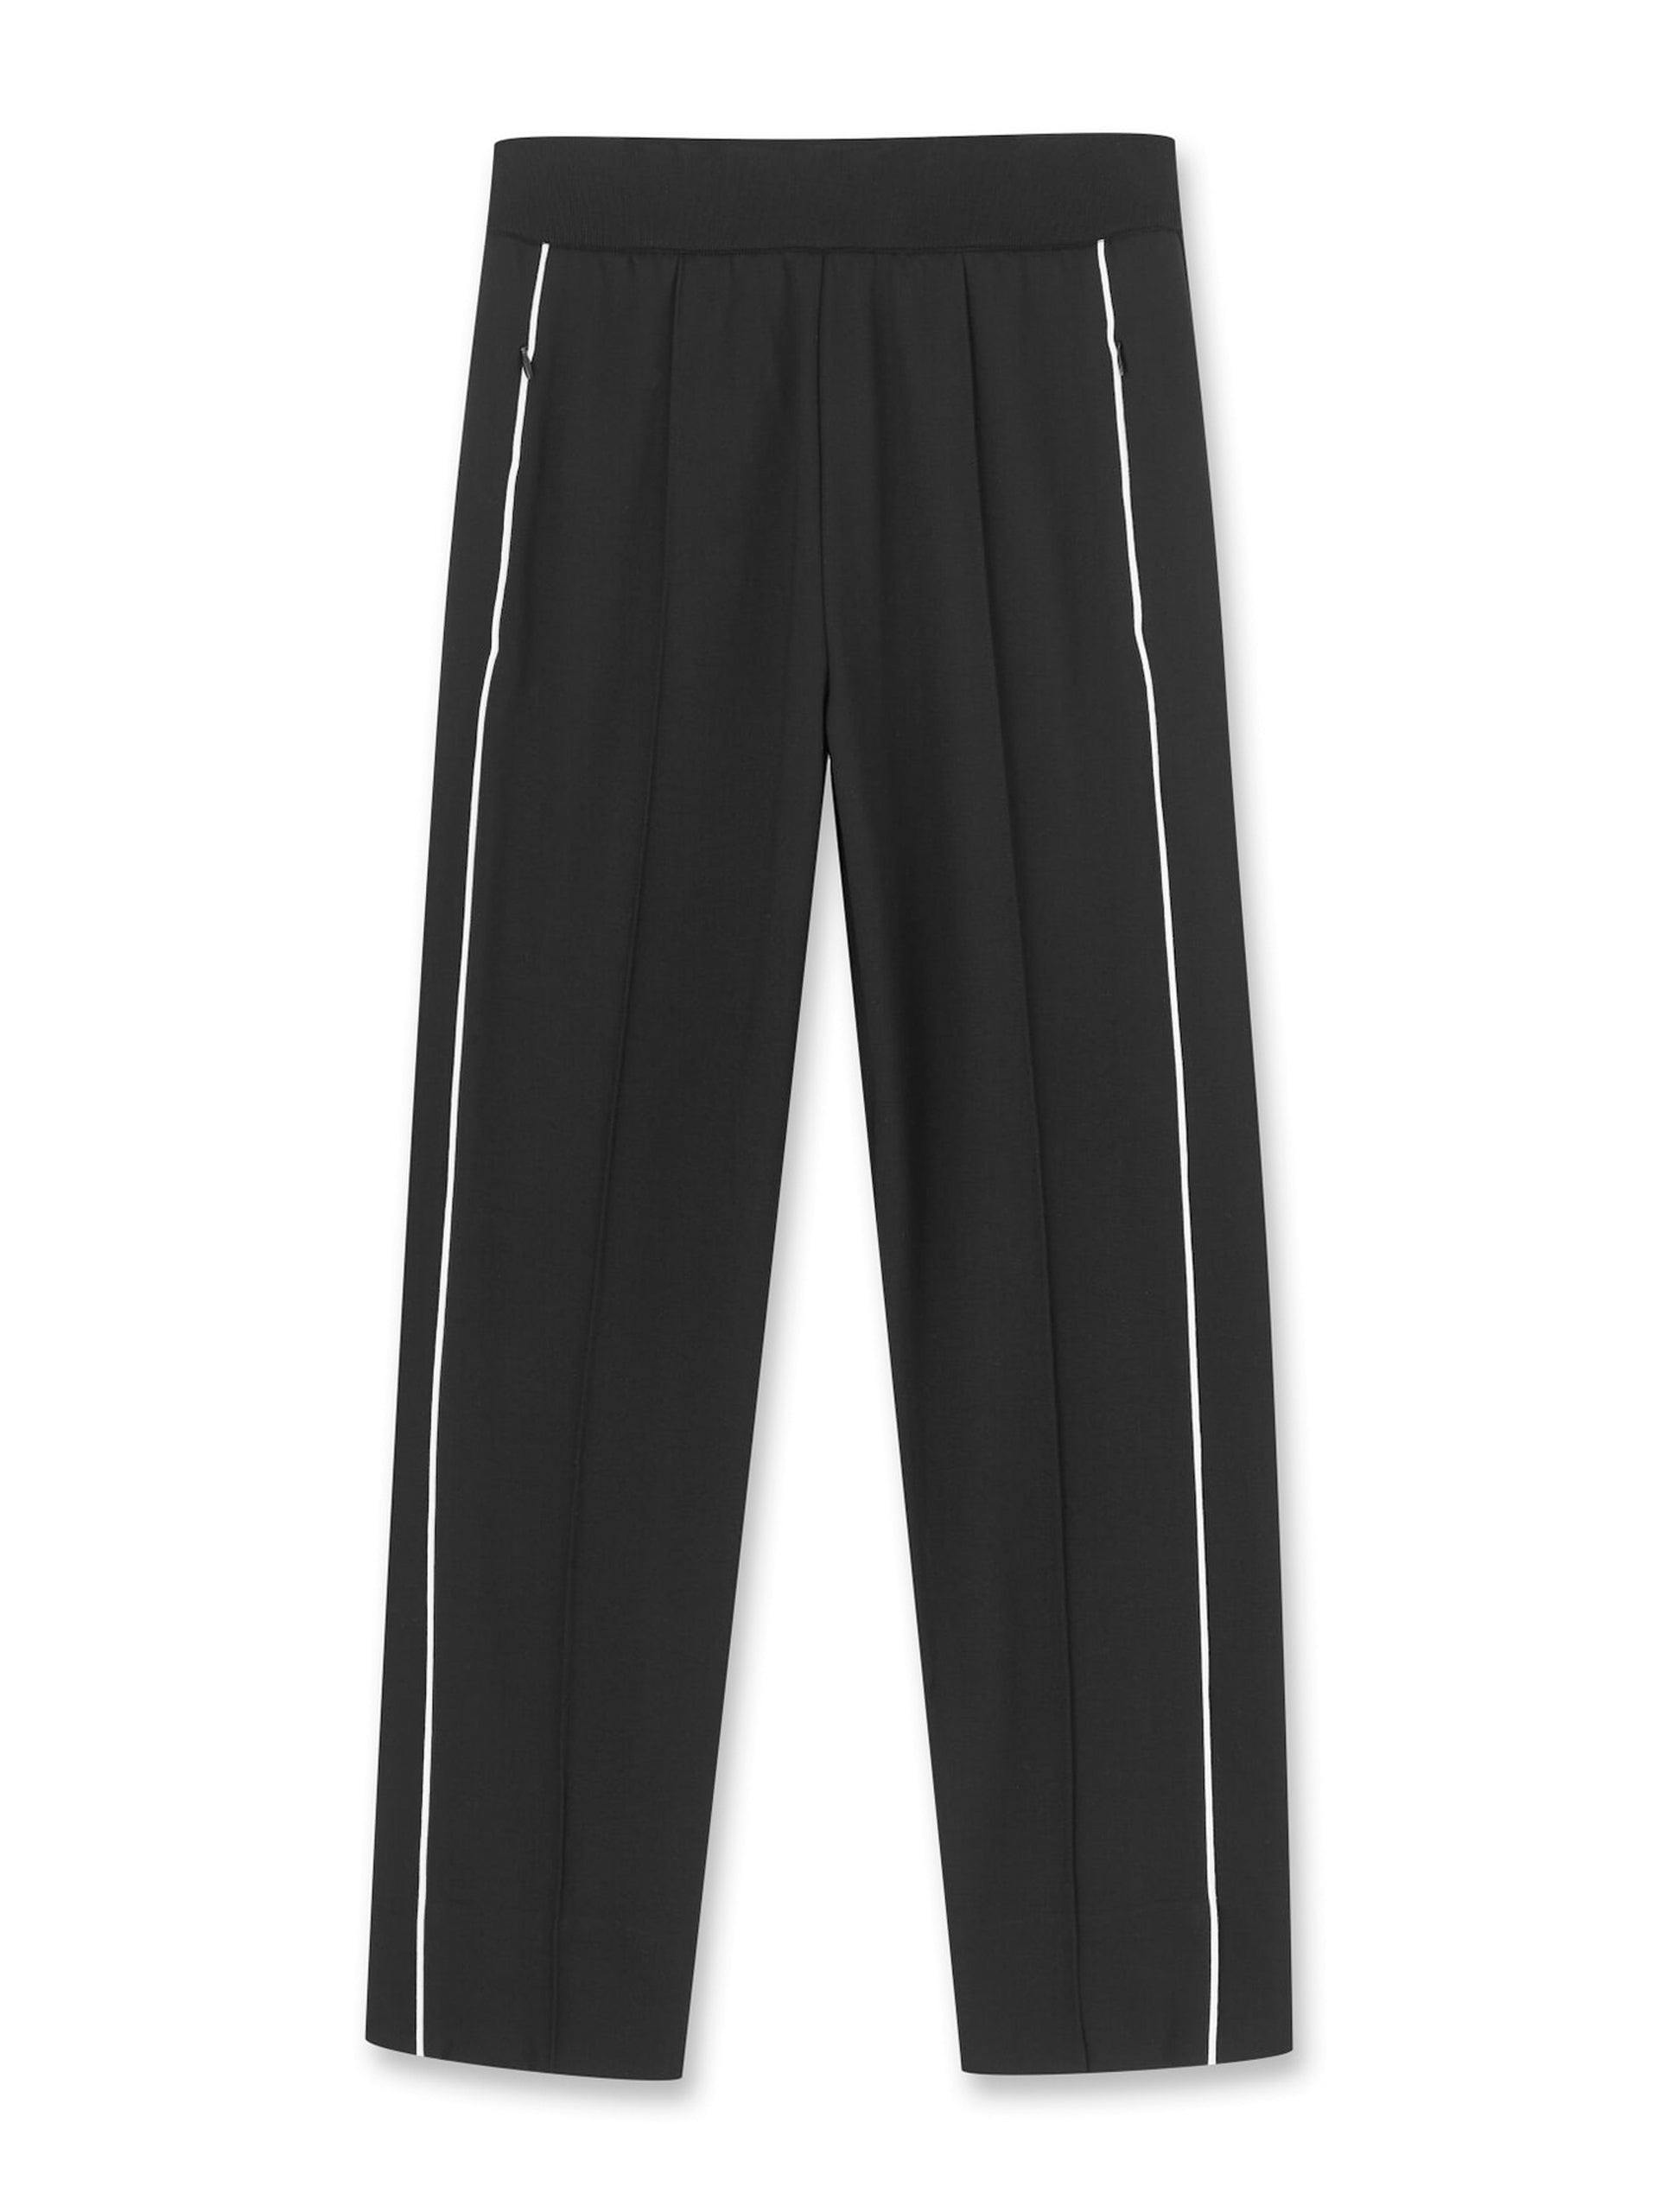 Black high-waist slim crop trousers